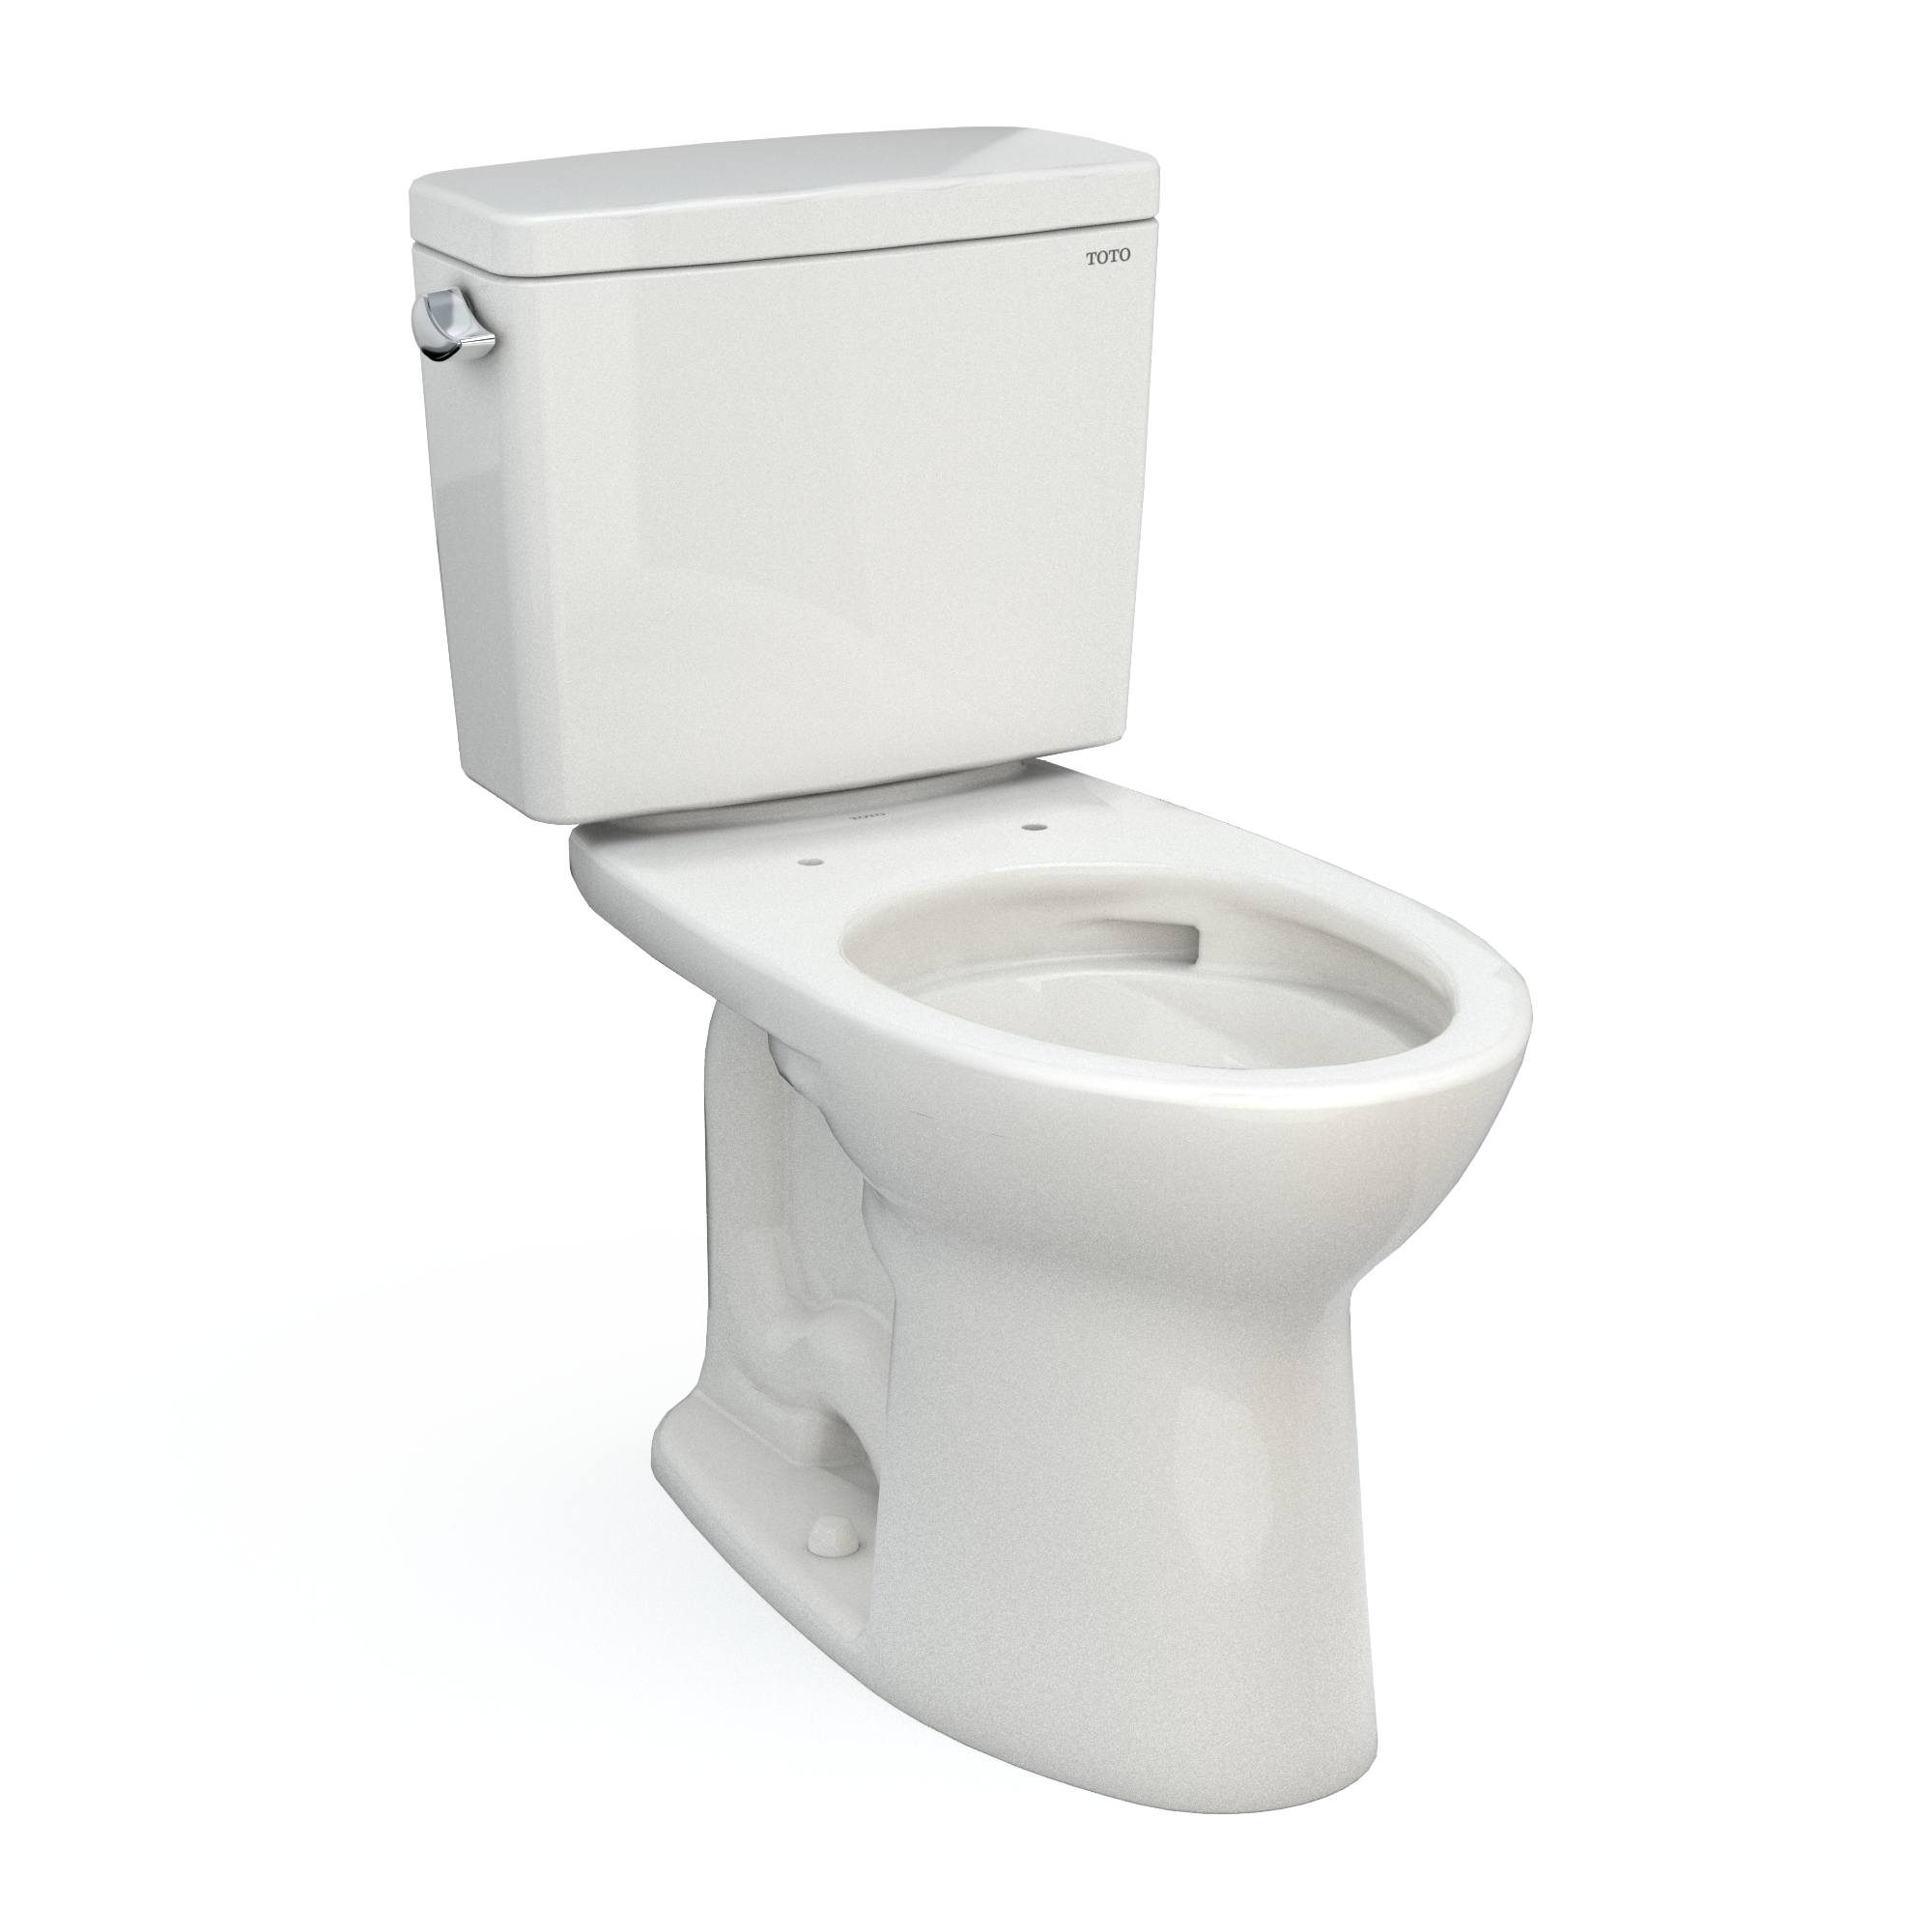  Toilets - Roca / Toilets / Toilets & Toilet Parts: Tools & Home  Improvement